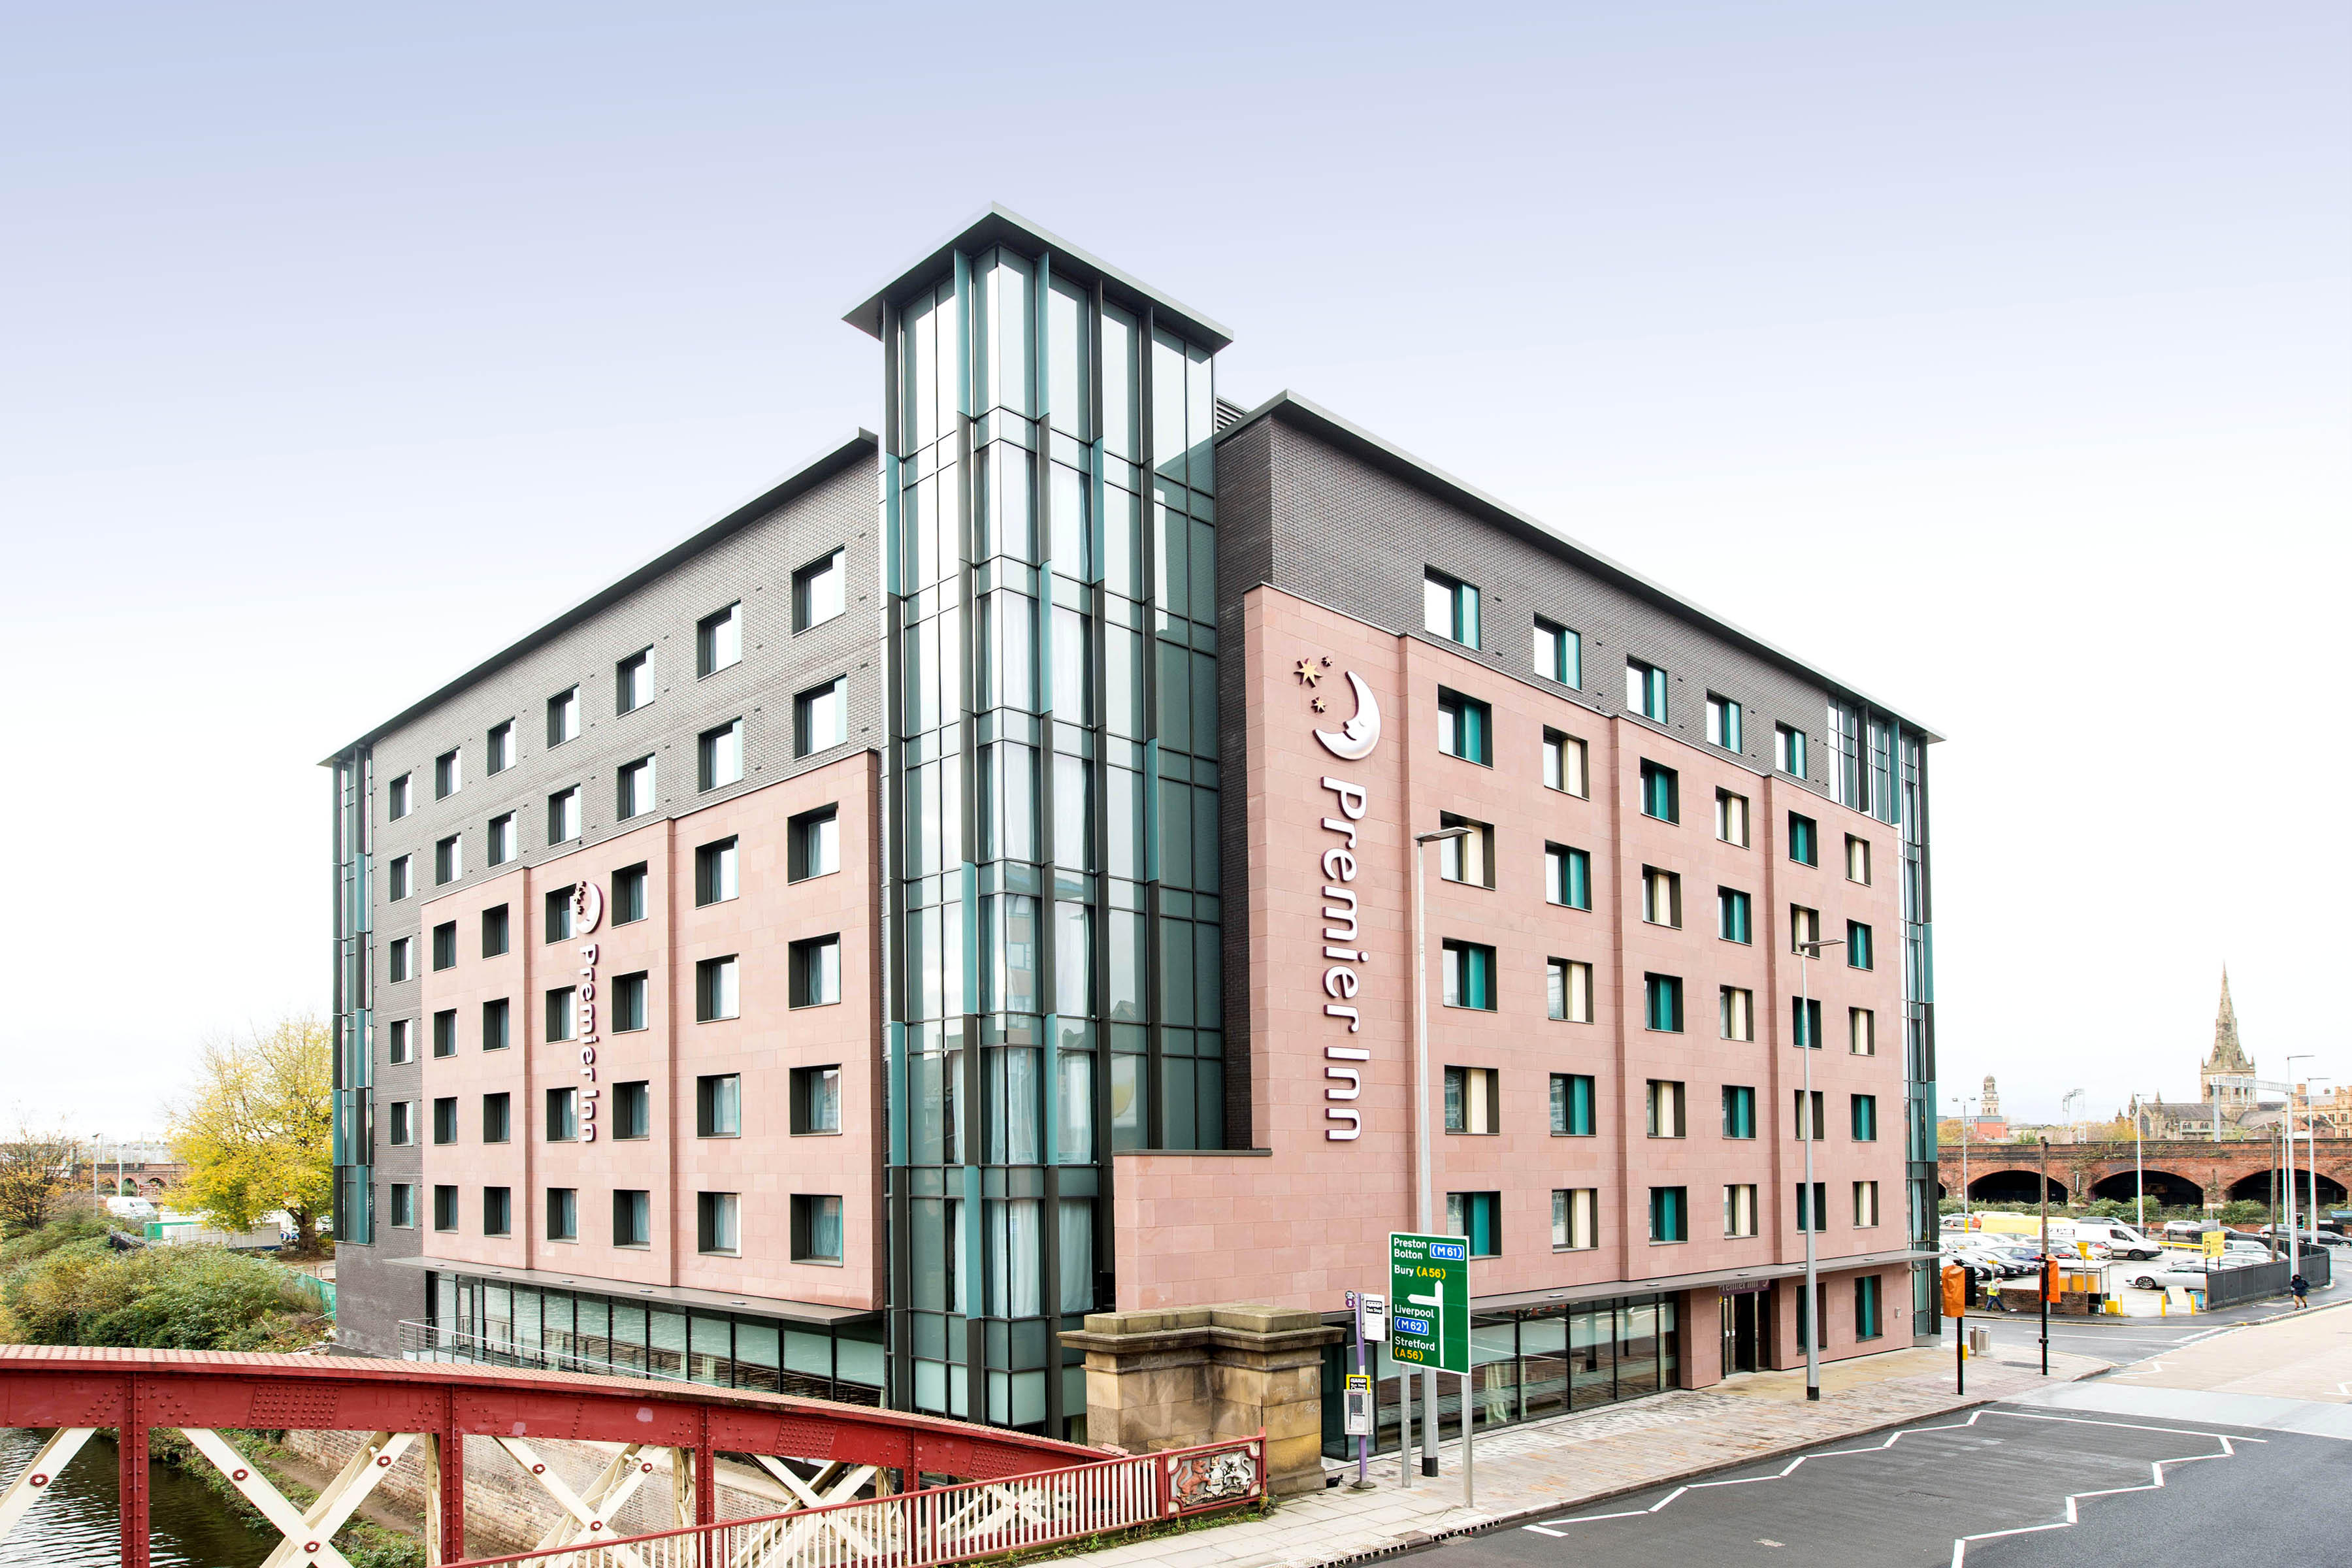 Manchester City Centre West Premier Inn Manchester City Centre West hotel Salford 03333 219367